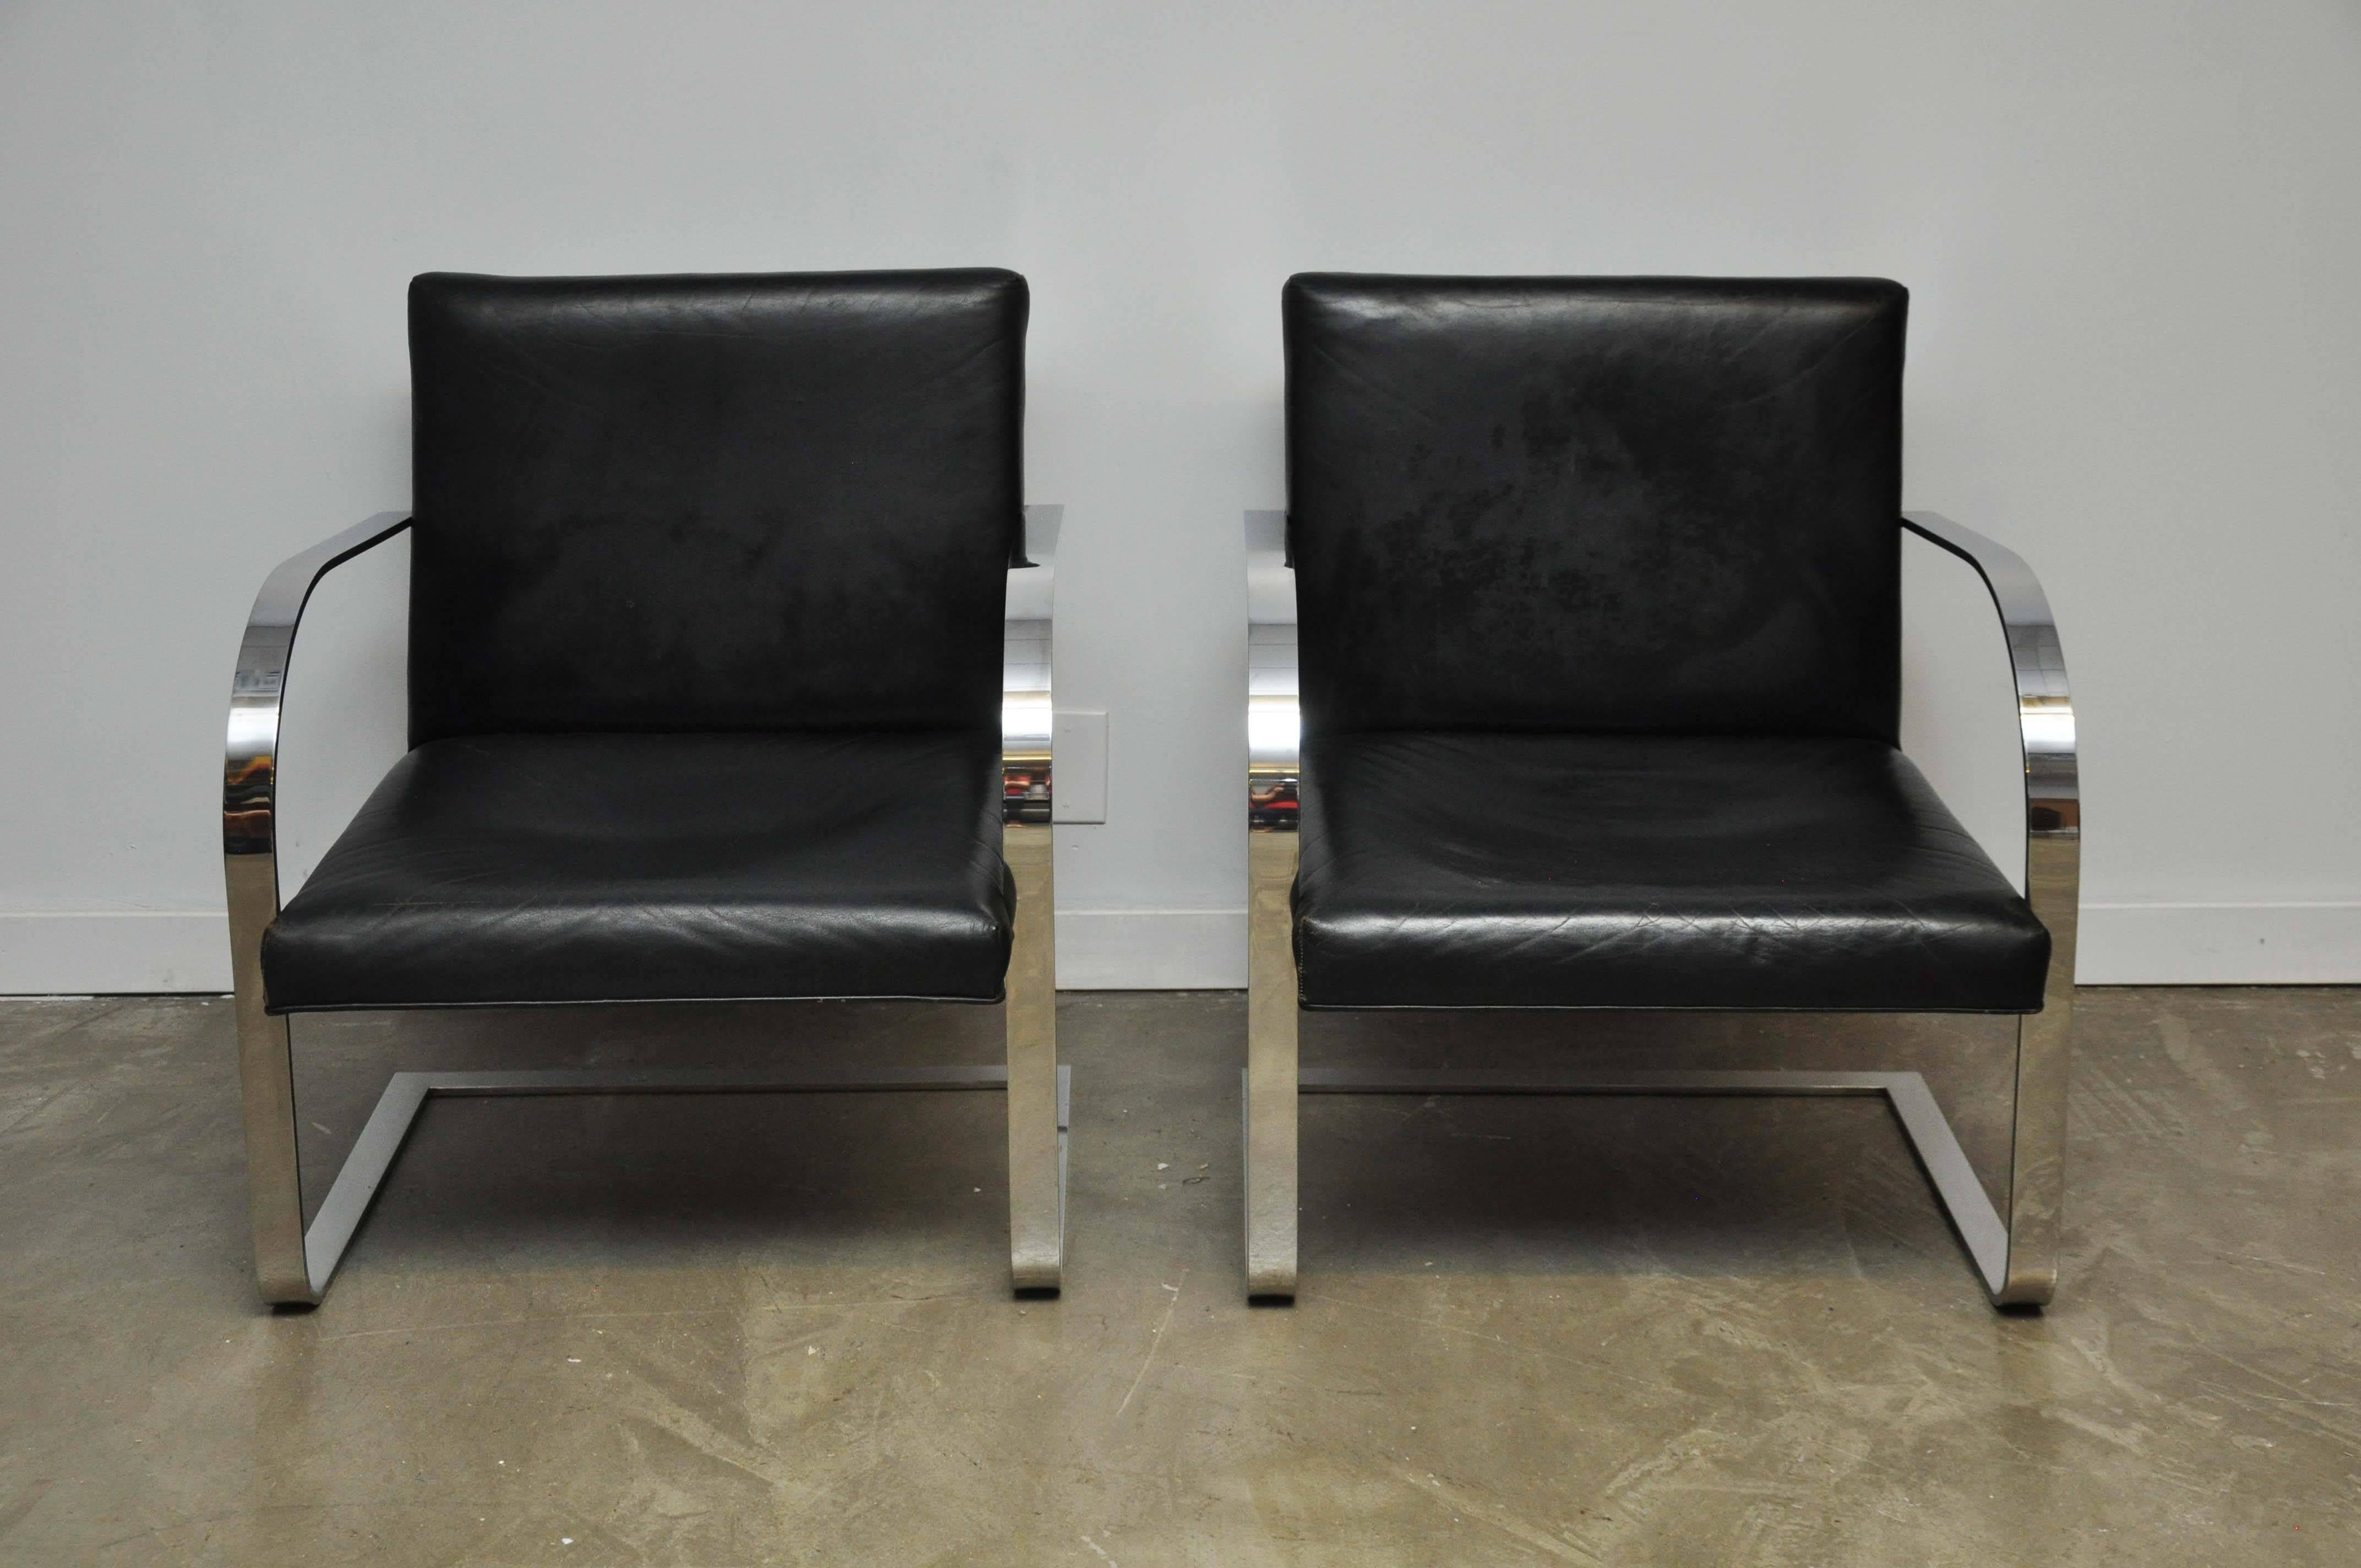 American Rare 1960s Mies van der Rohe Brno Lounge Chairs by Brueton